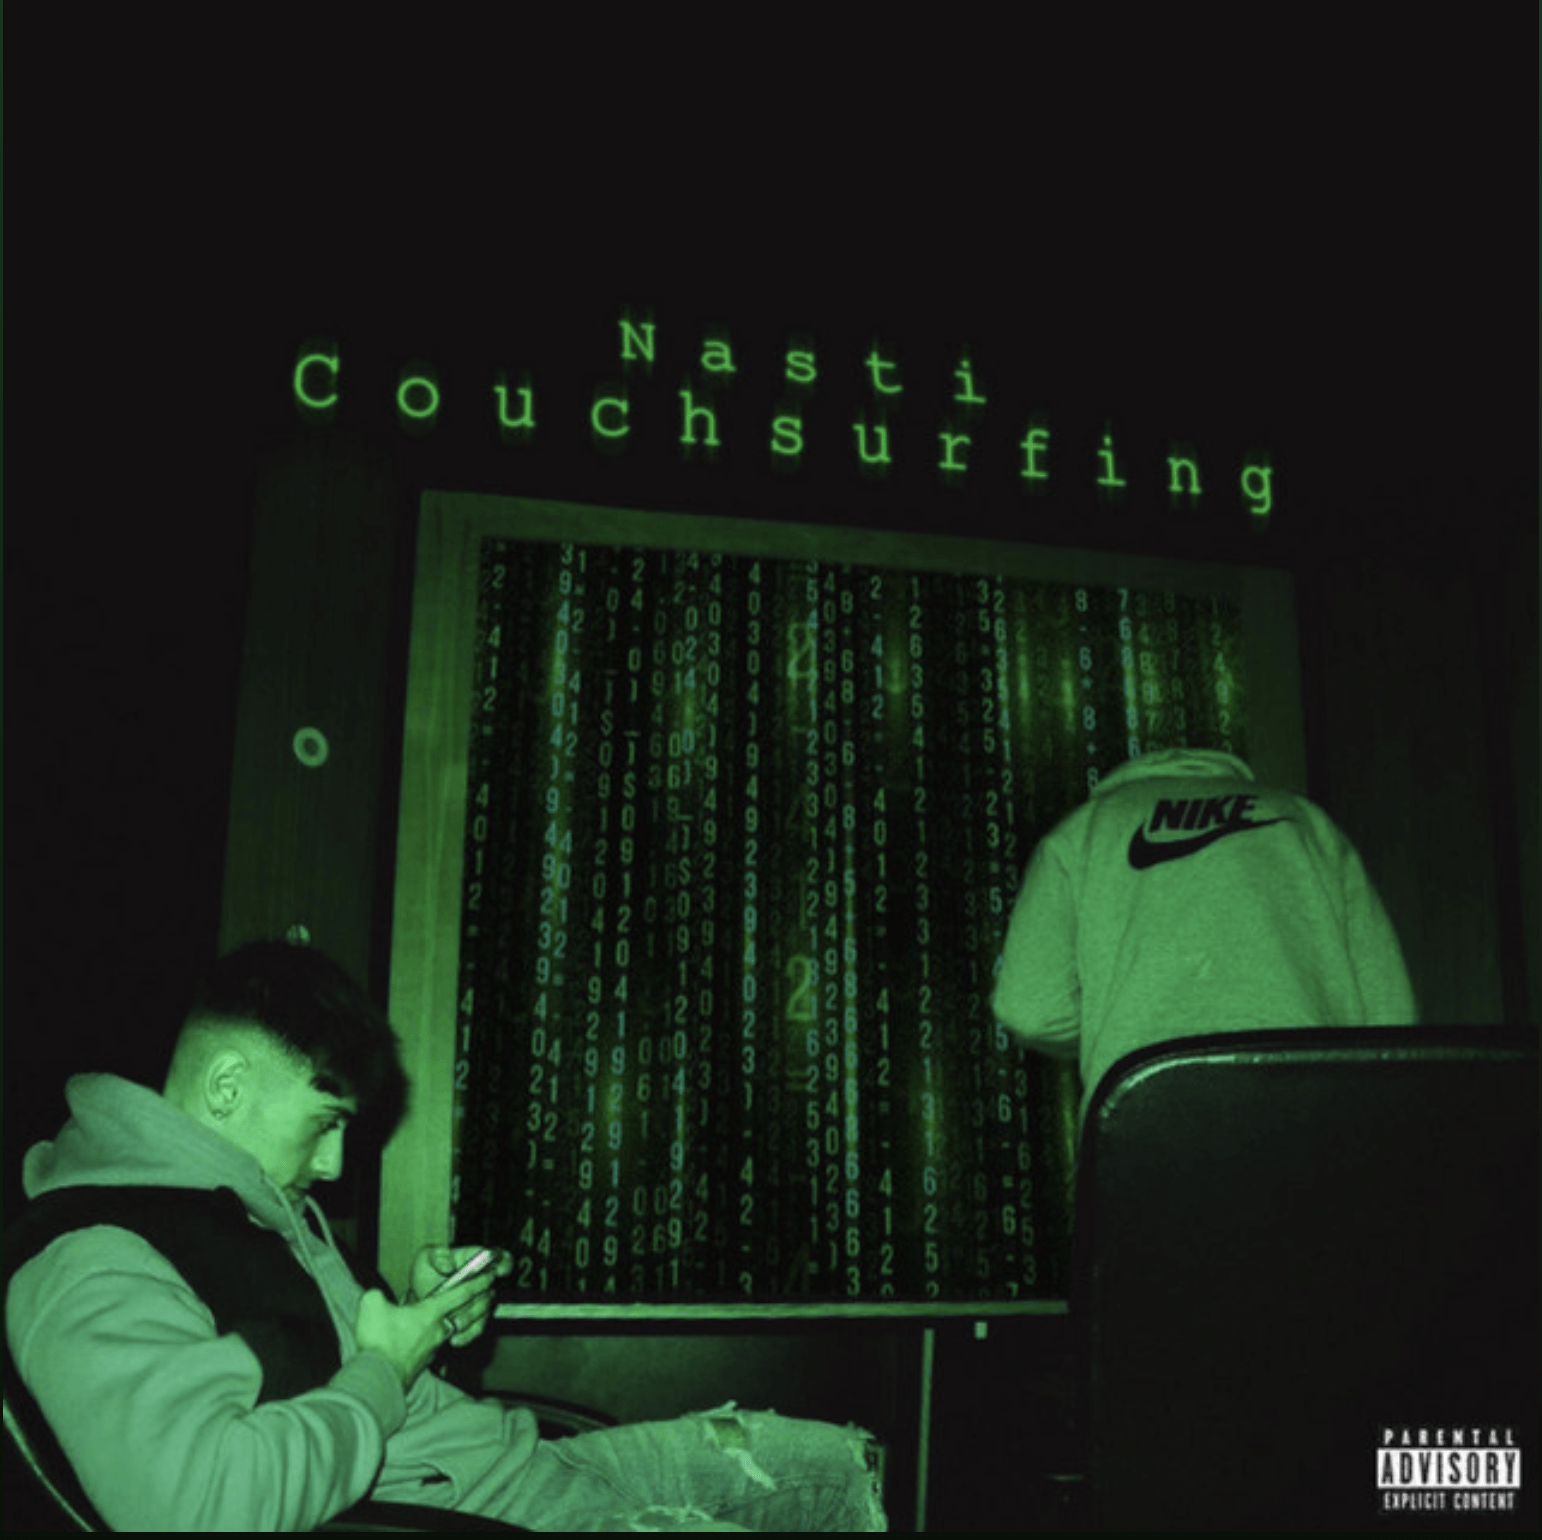 Couchsurfing (Original Single) by Nasti